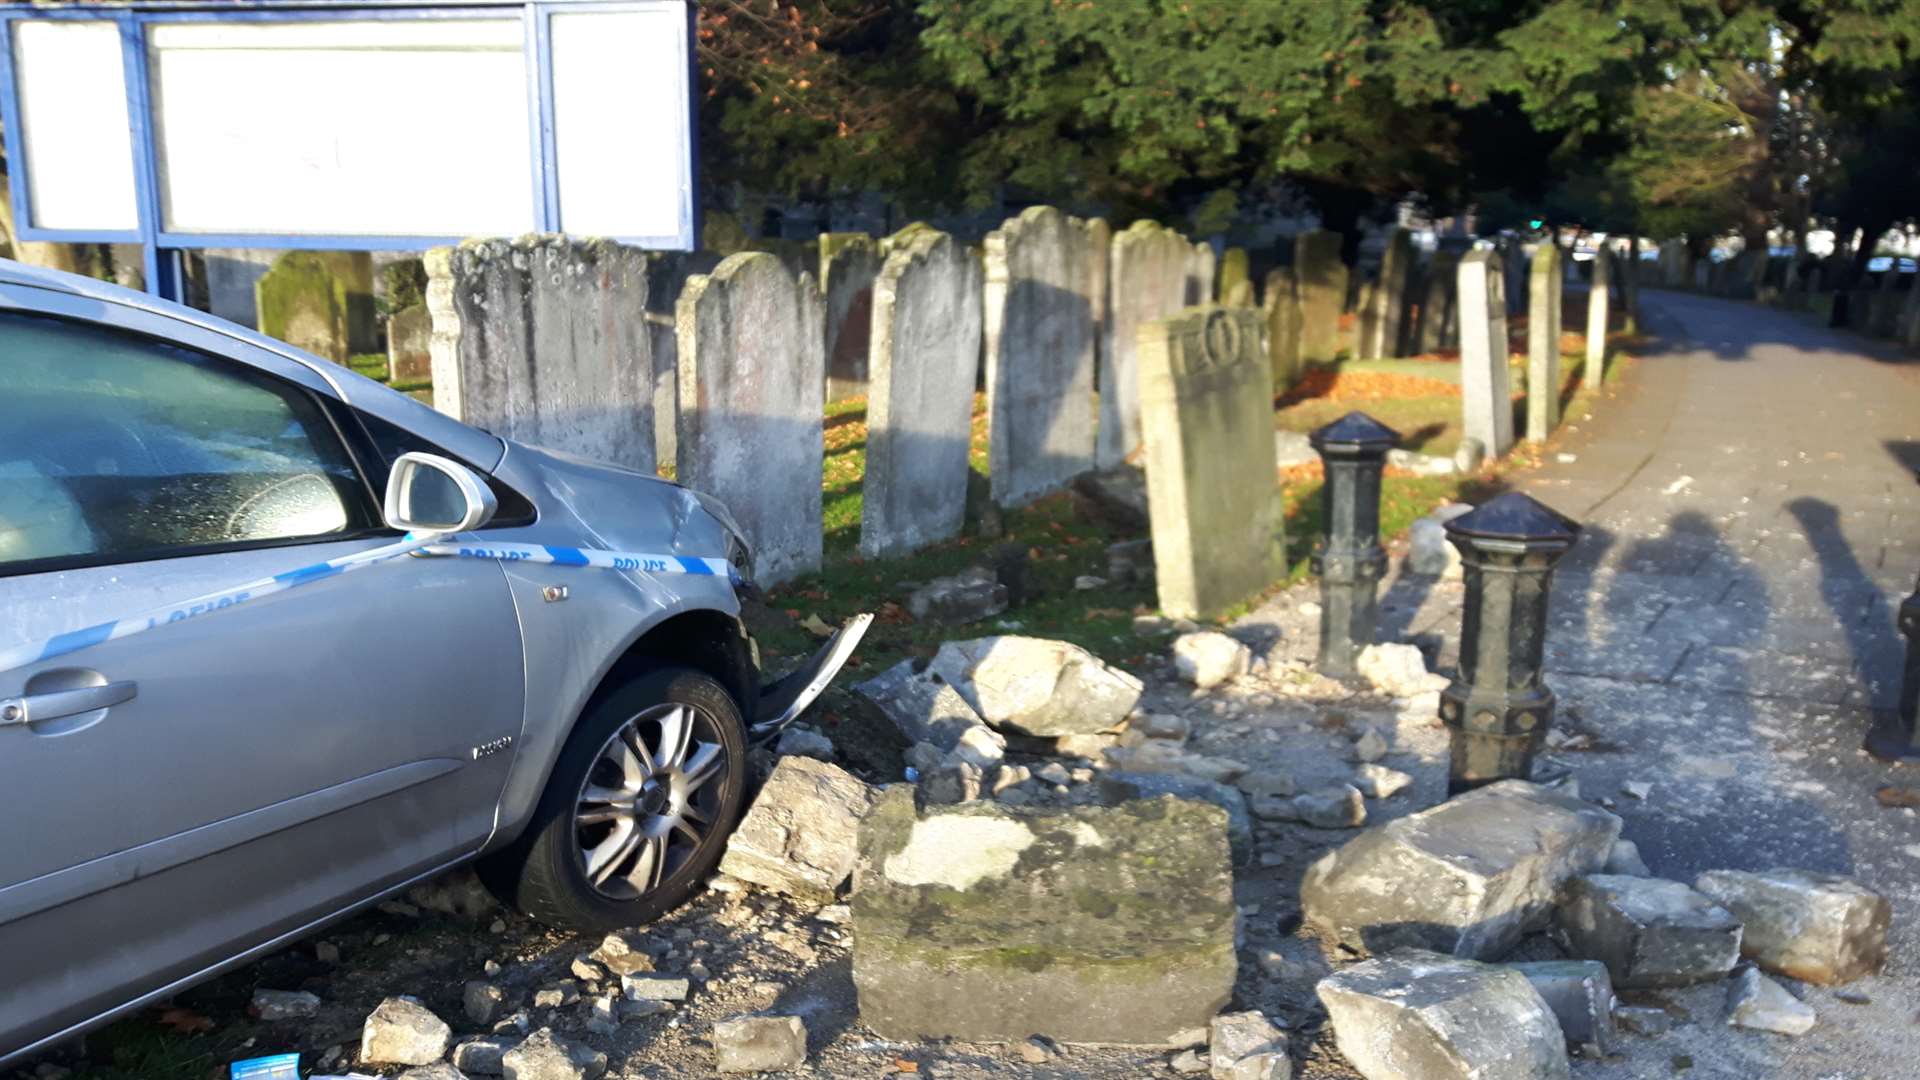 A car has crashed at All Saints graveyard